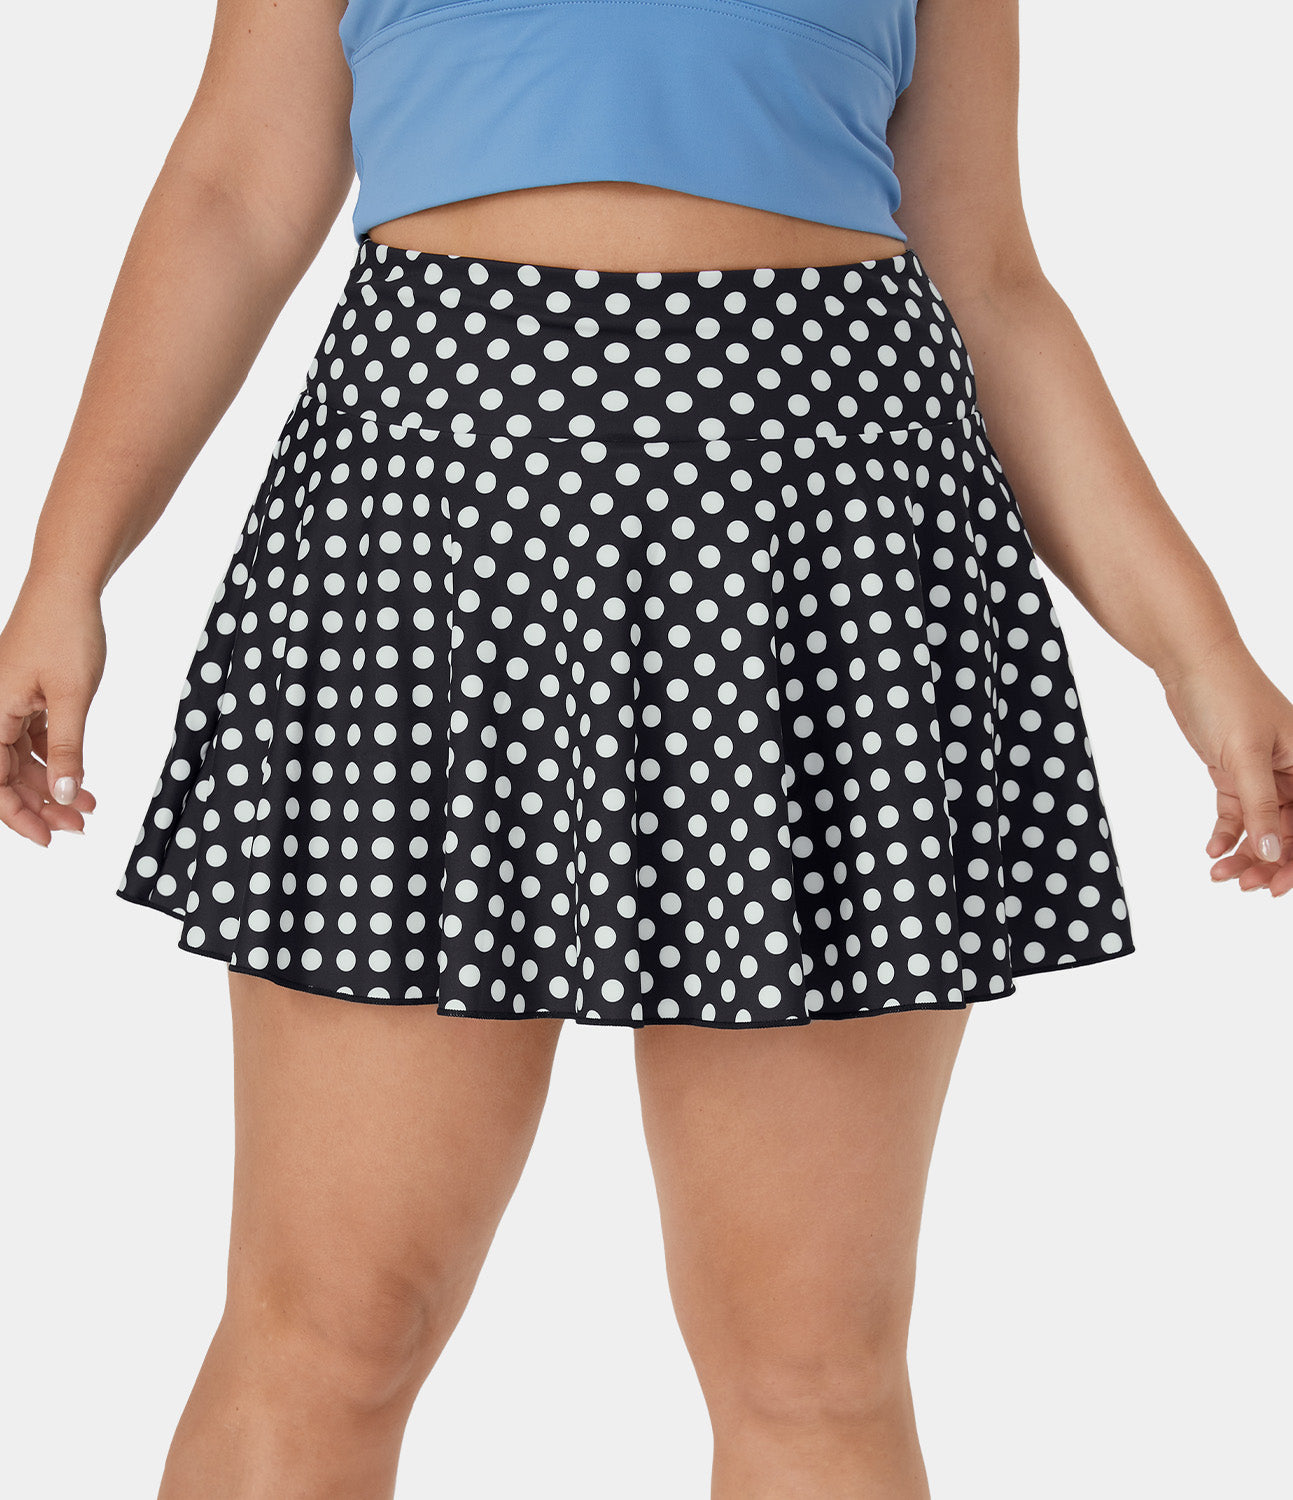 

Halara High Waisted Print Tennis 2-in-1 Plus Size Skirt - Polka Polka